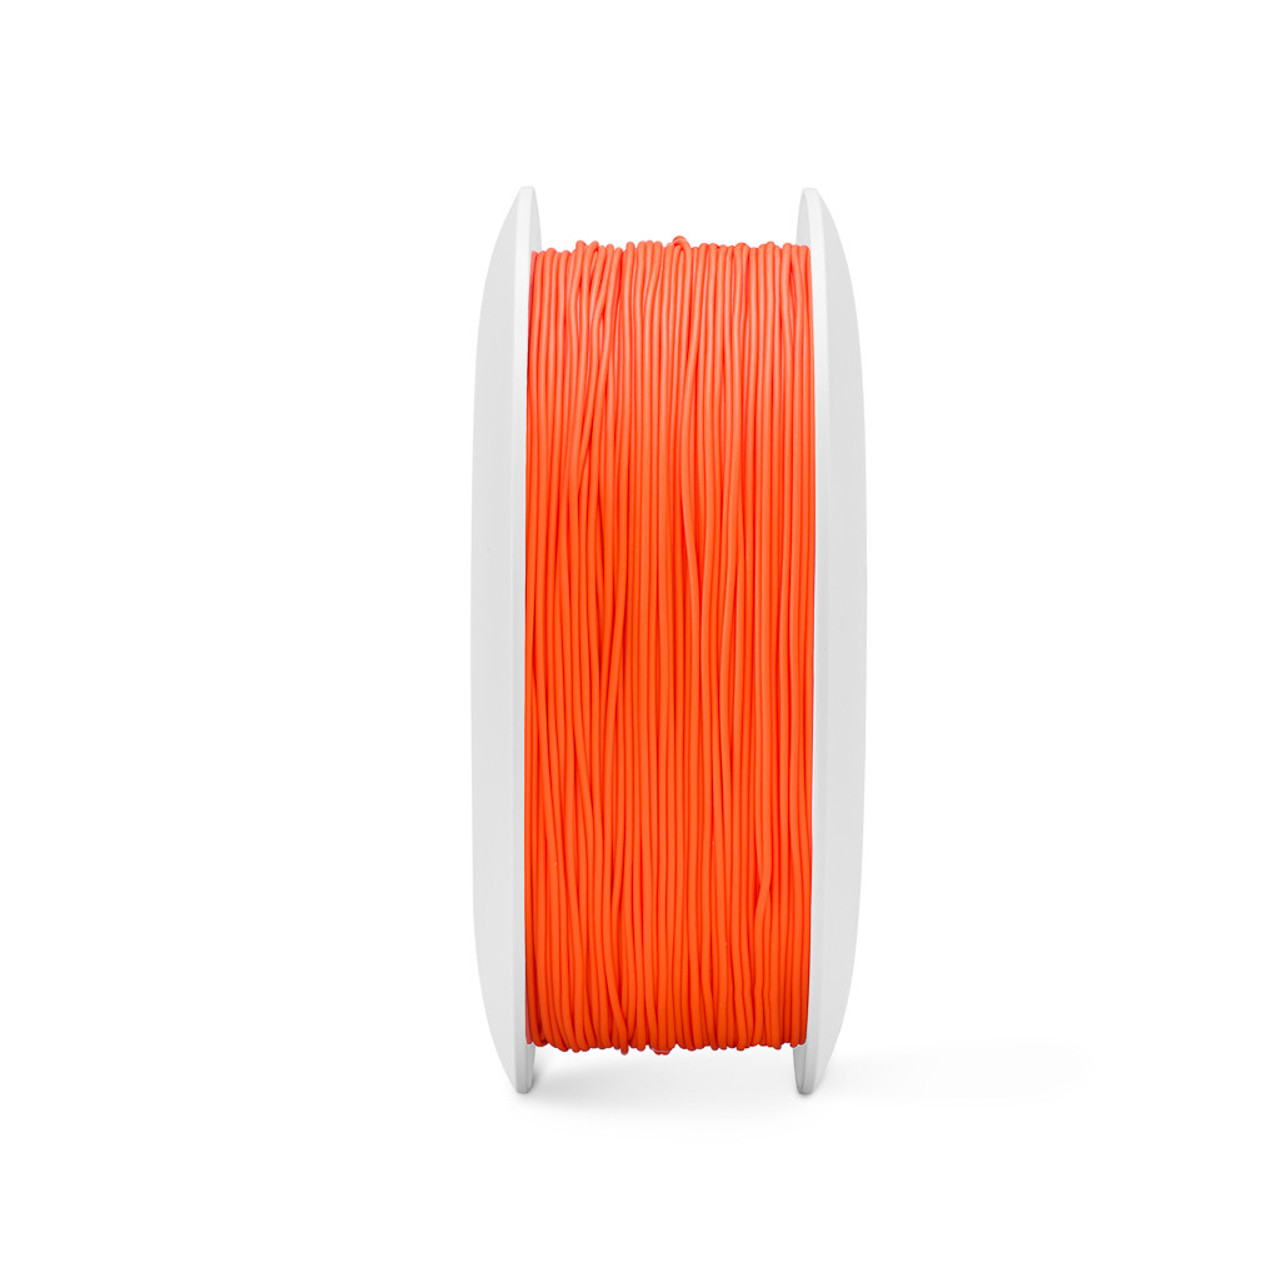 Fiberlogy Fiberflex 40D Orange 2.85mm 3D Printing Filament